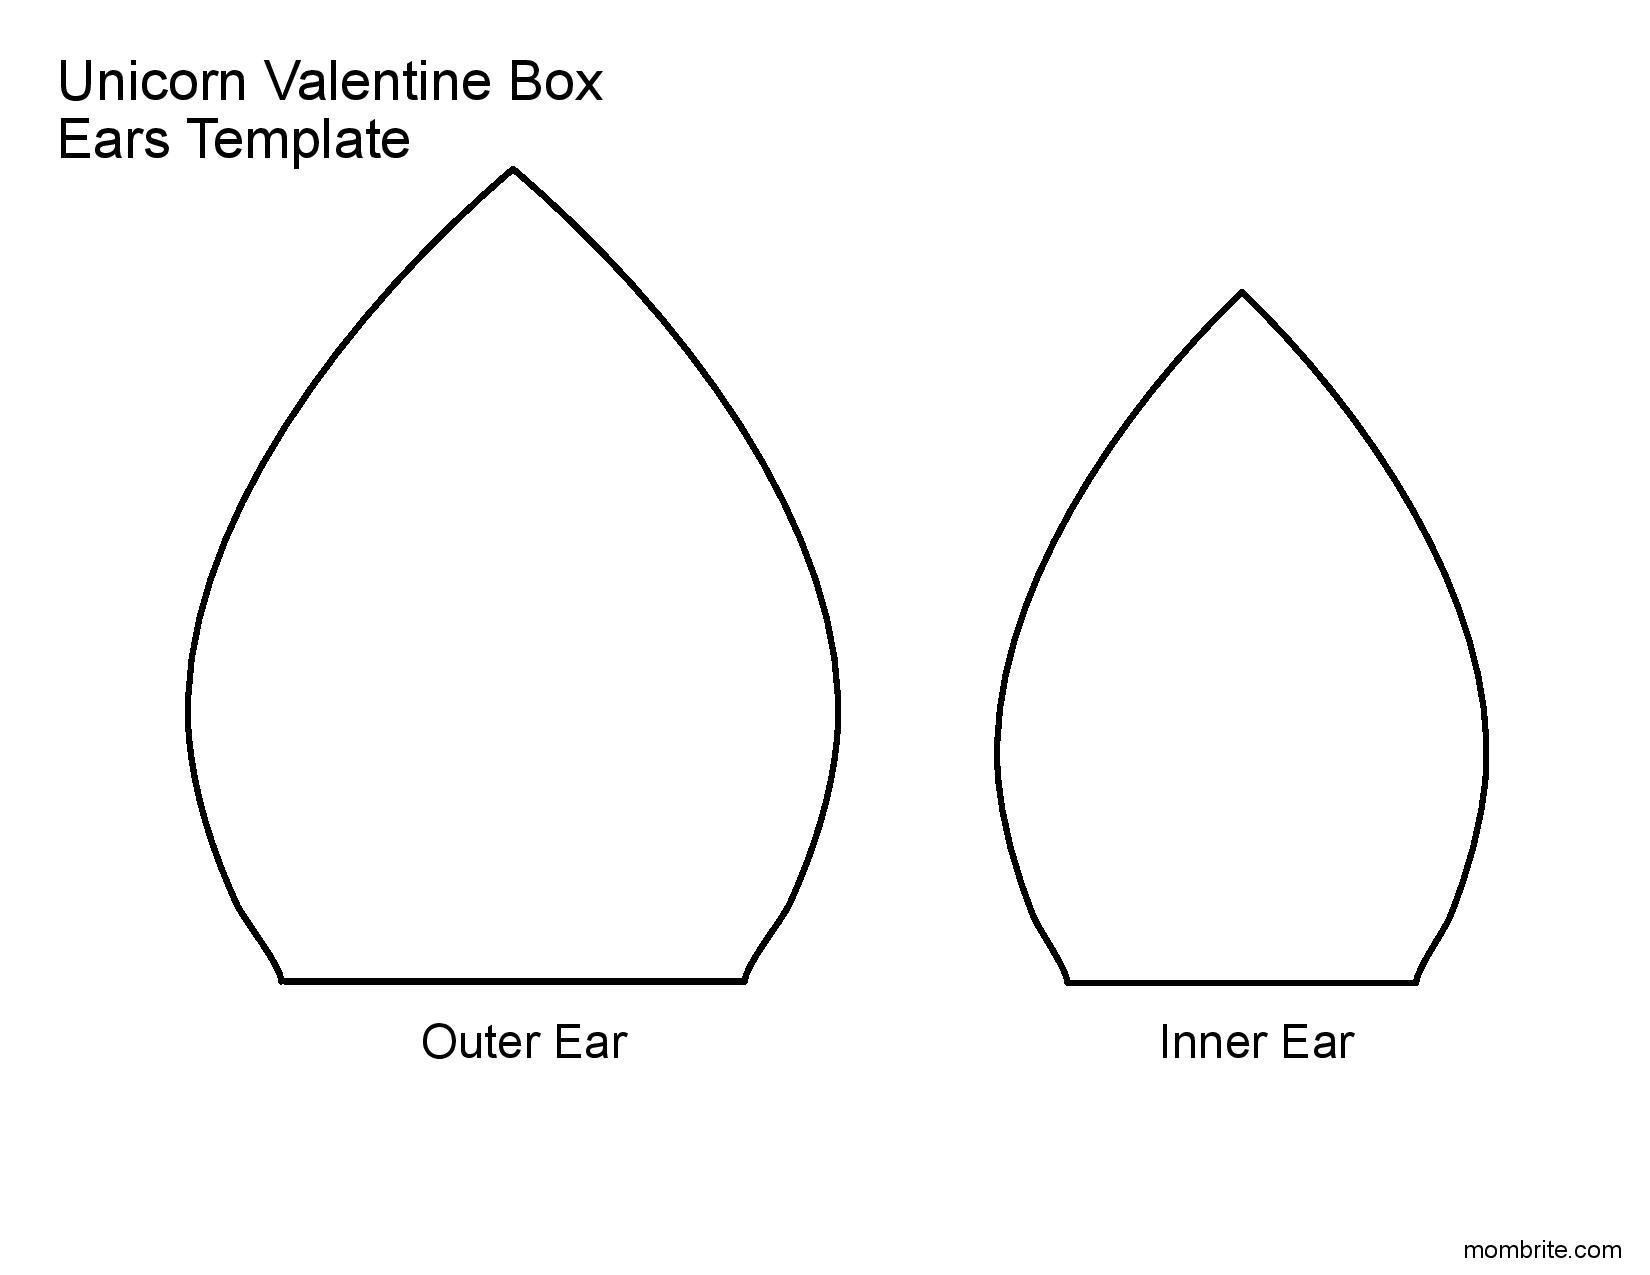 Free Unicorn Valentine Box Template